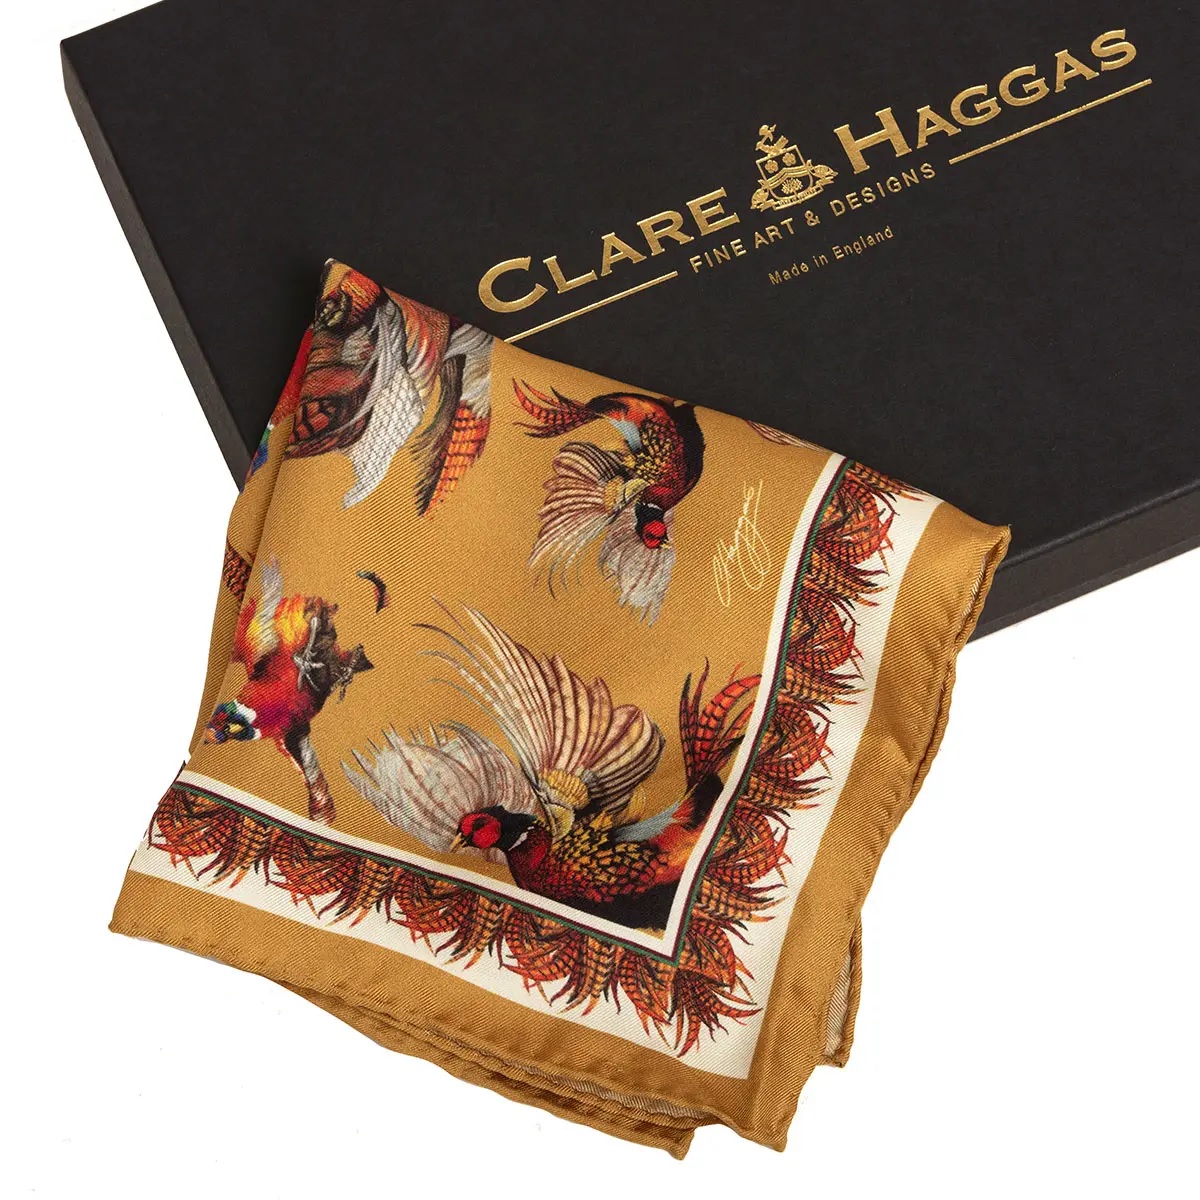 Clare-Haggas-Pocket-Square-Turf-War-Gold.jpg